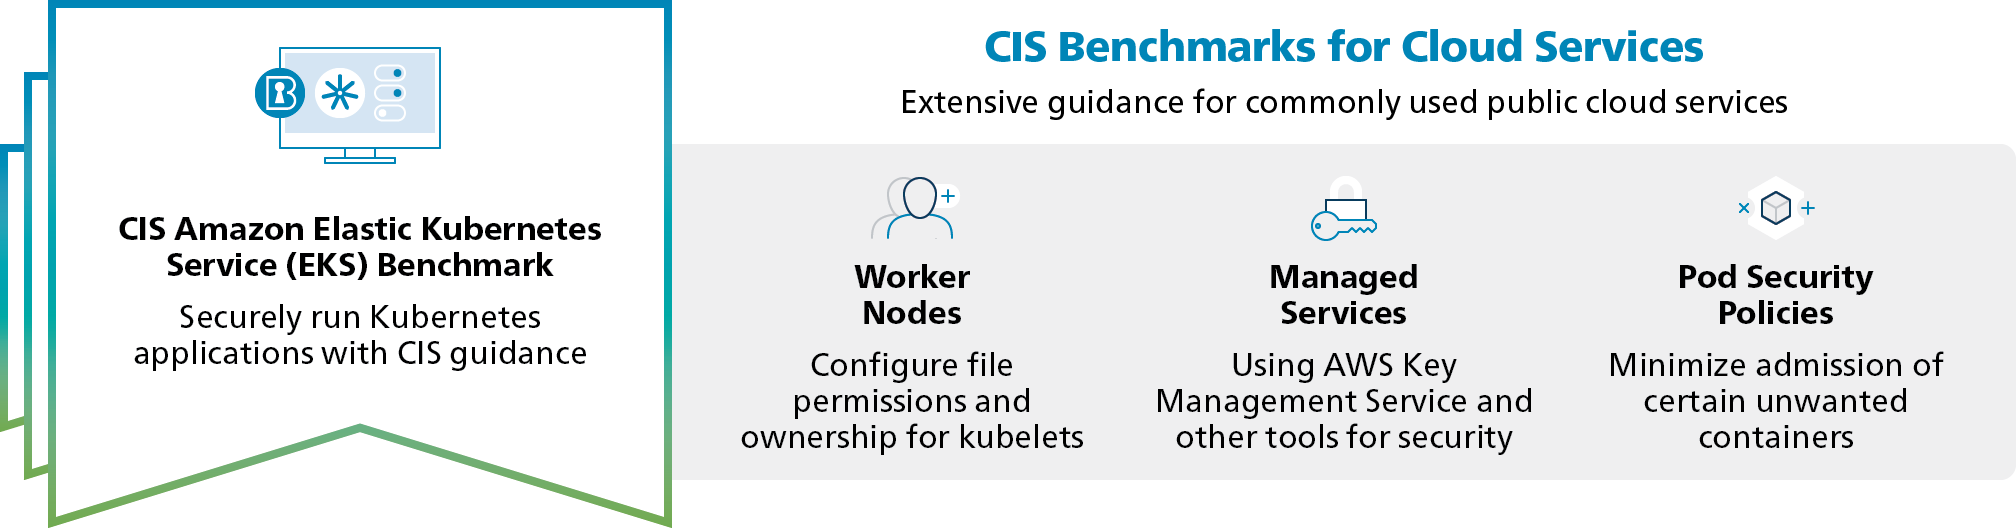 CIS-Amazon_Elastic_Kubernetes_Service_Benchmark-Cloud_Services